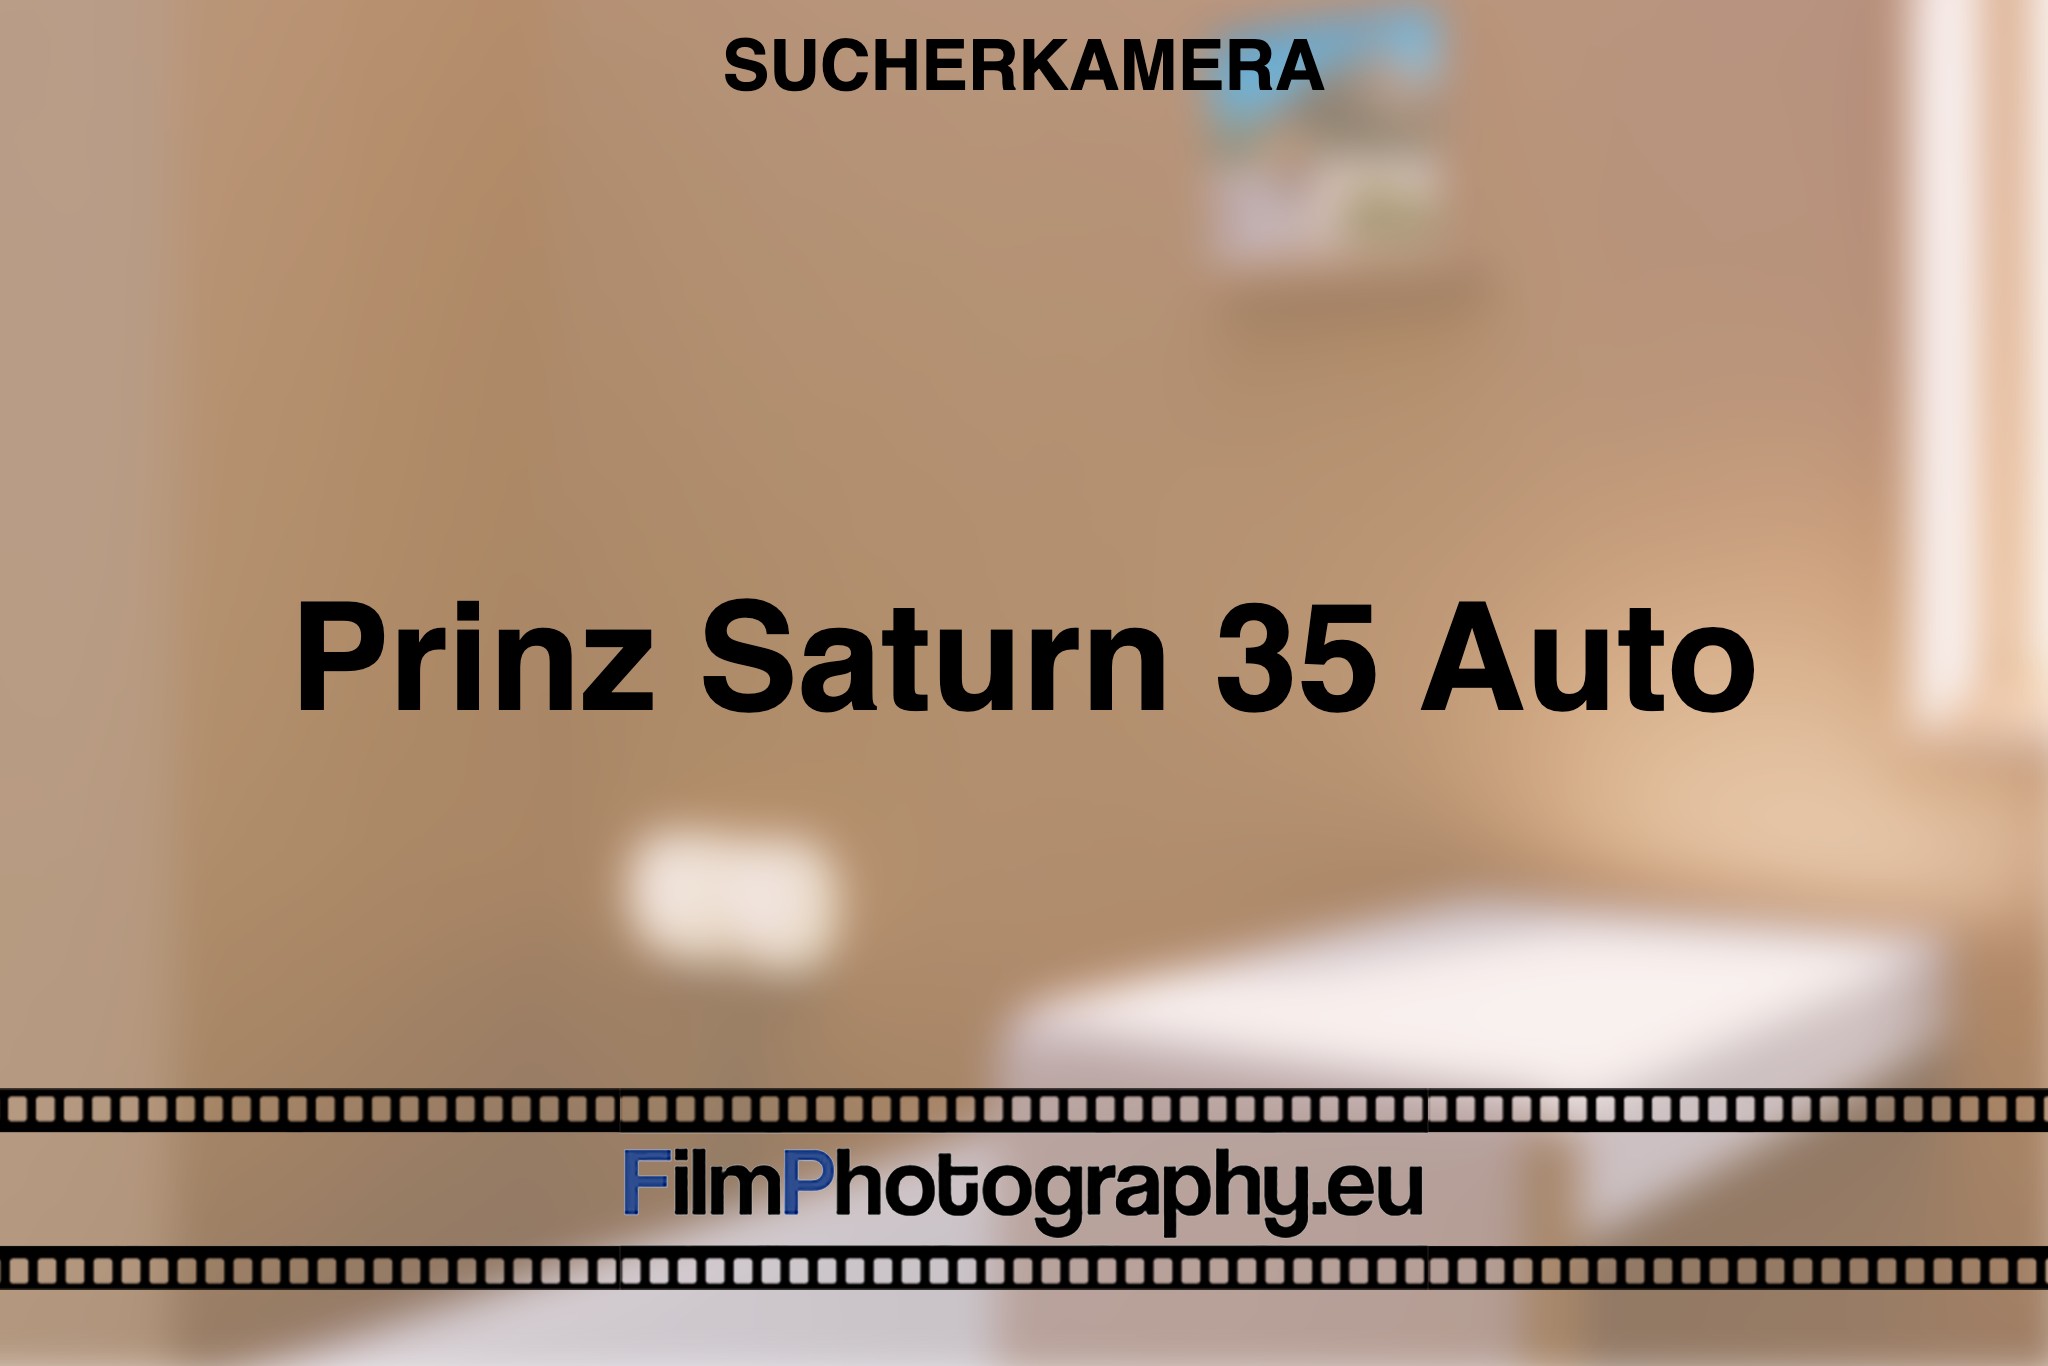 prinz-saturn-35-auto-sucherkamera-bnv